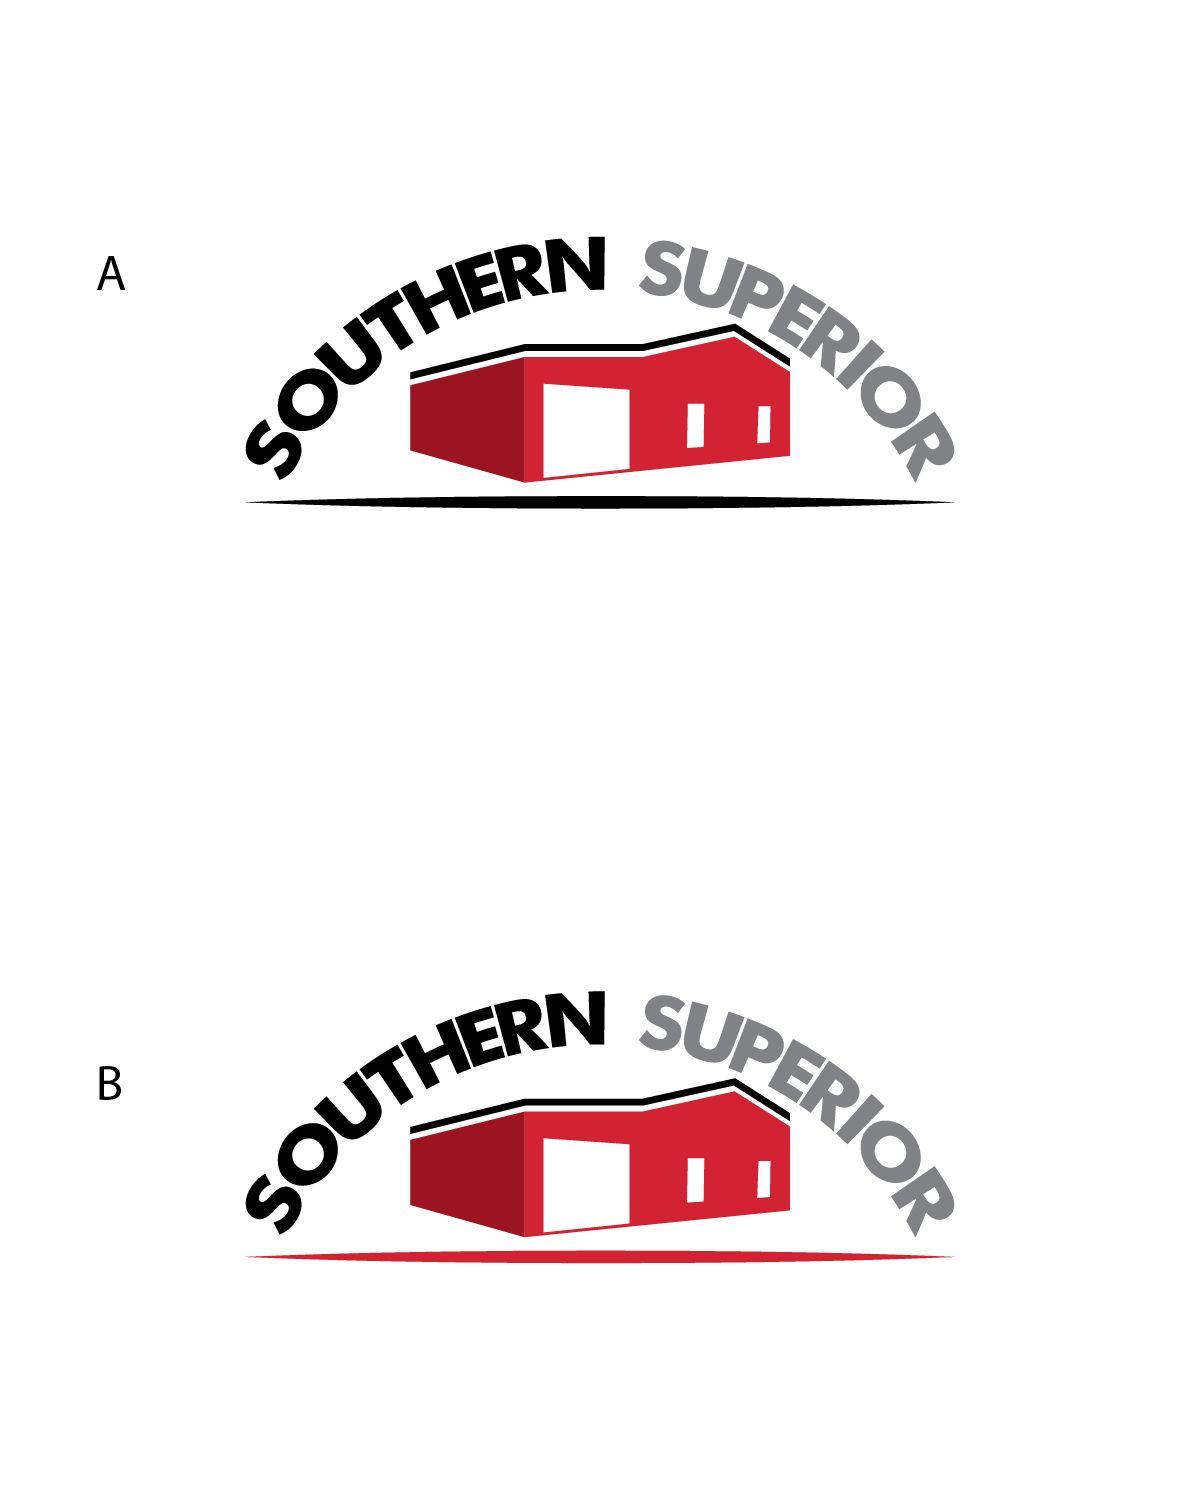 Black Arrow Logo - Upmarket, Bold, Construction Company Logo Design for Southern ...